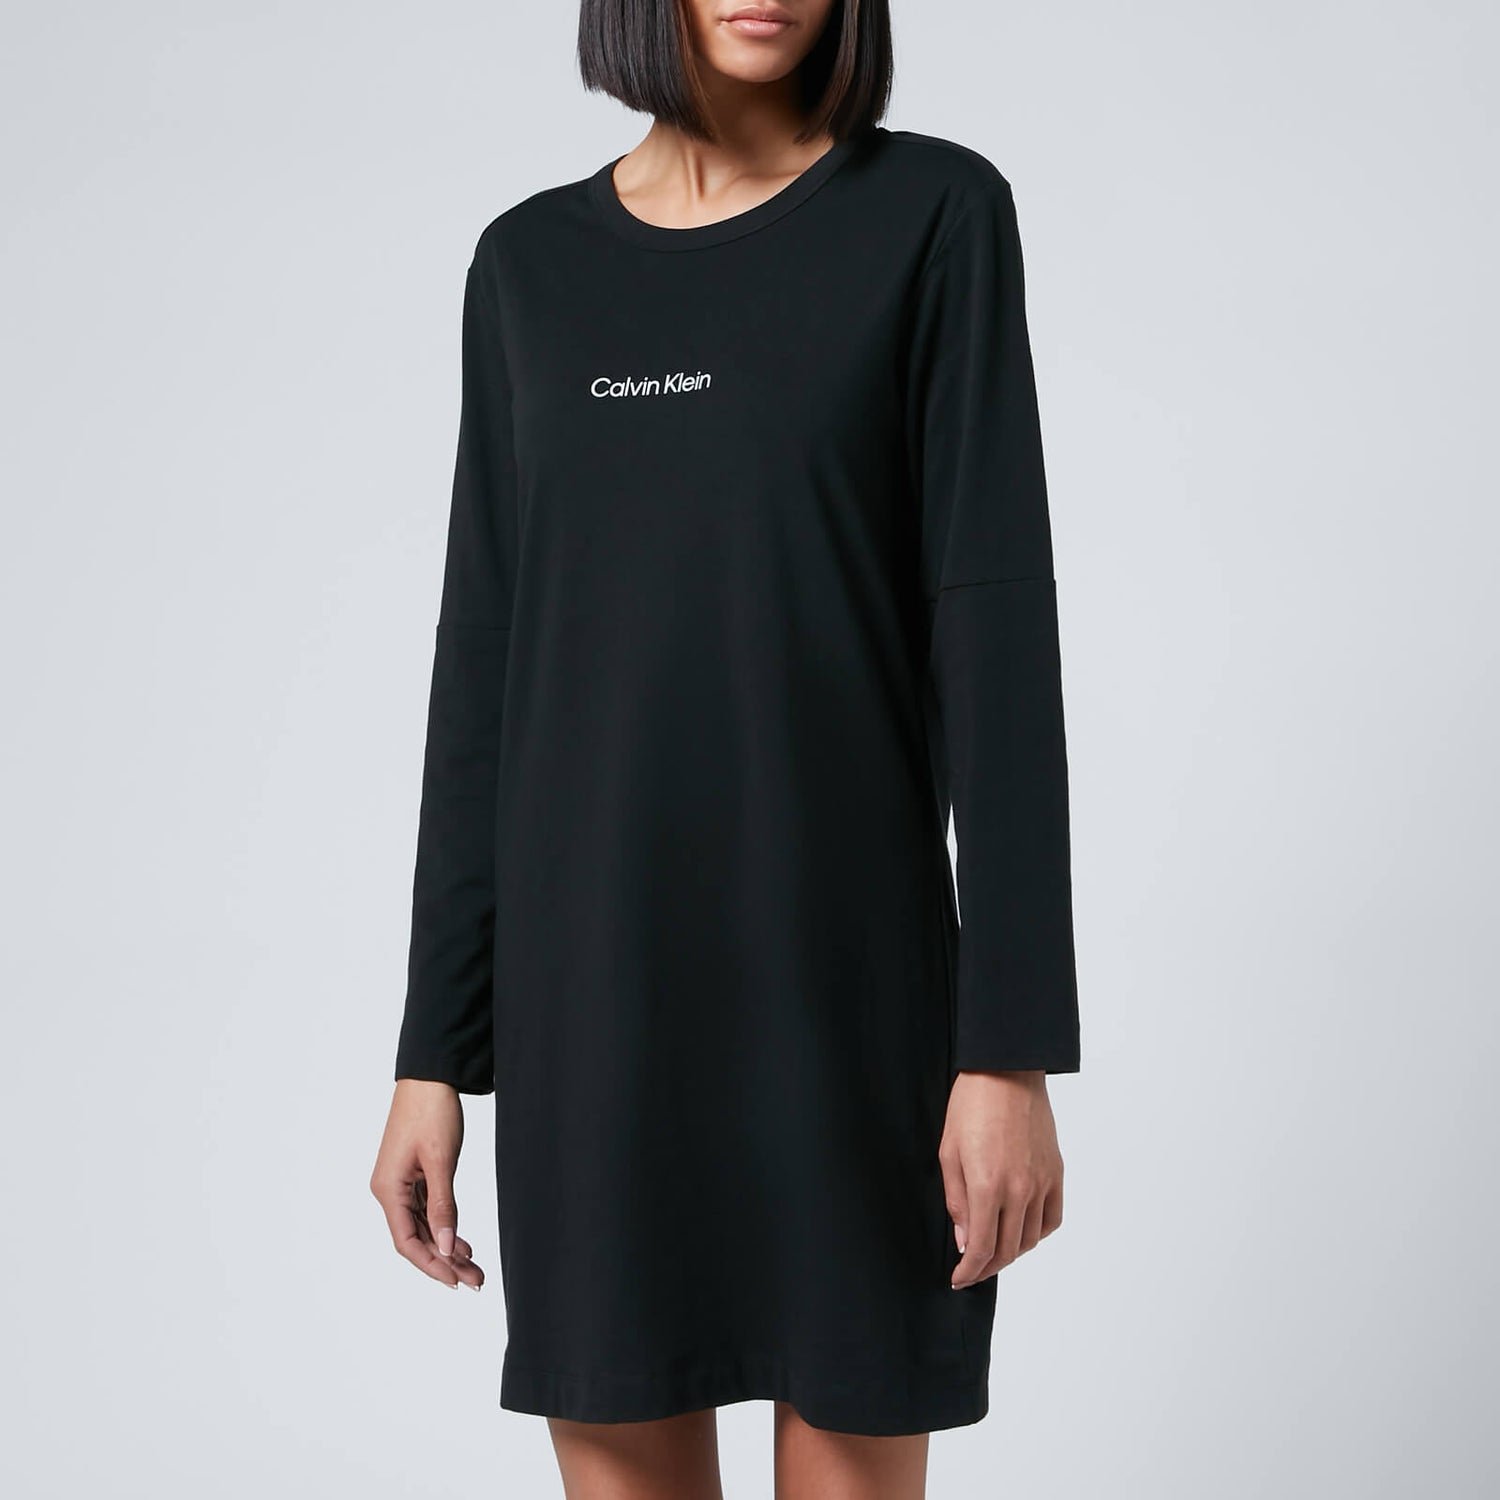 Calvin Klein Women's Long Sleeve Nightshirt - Black